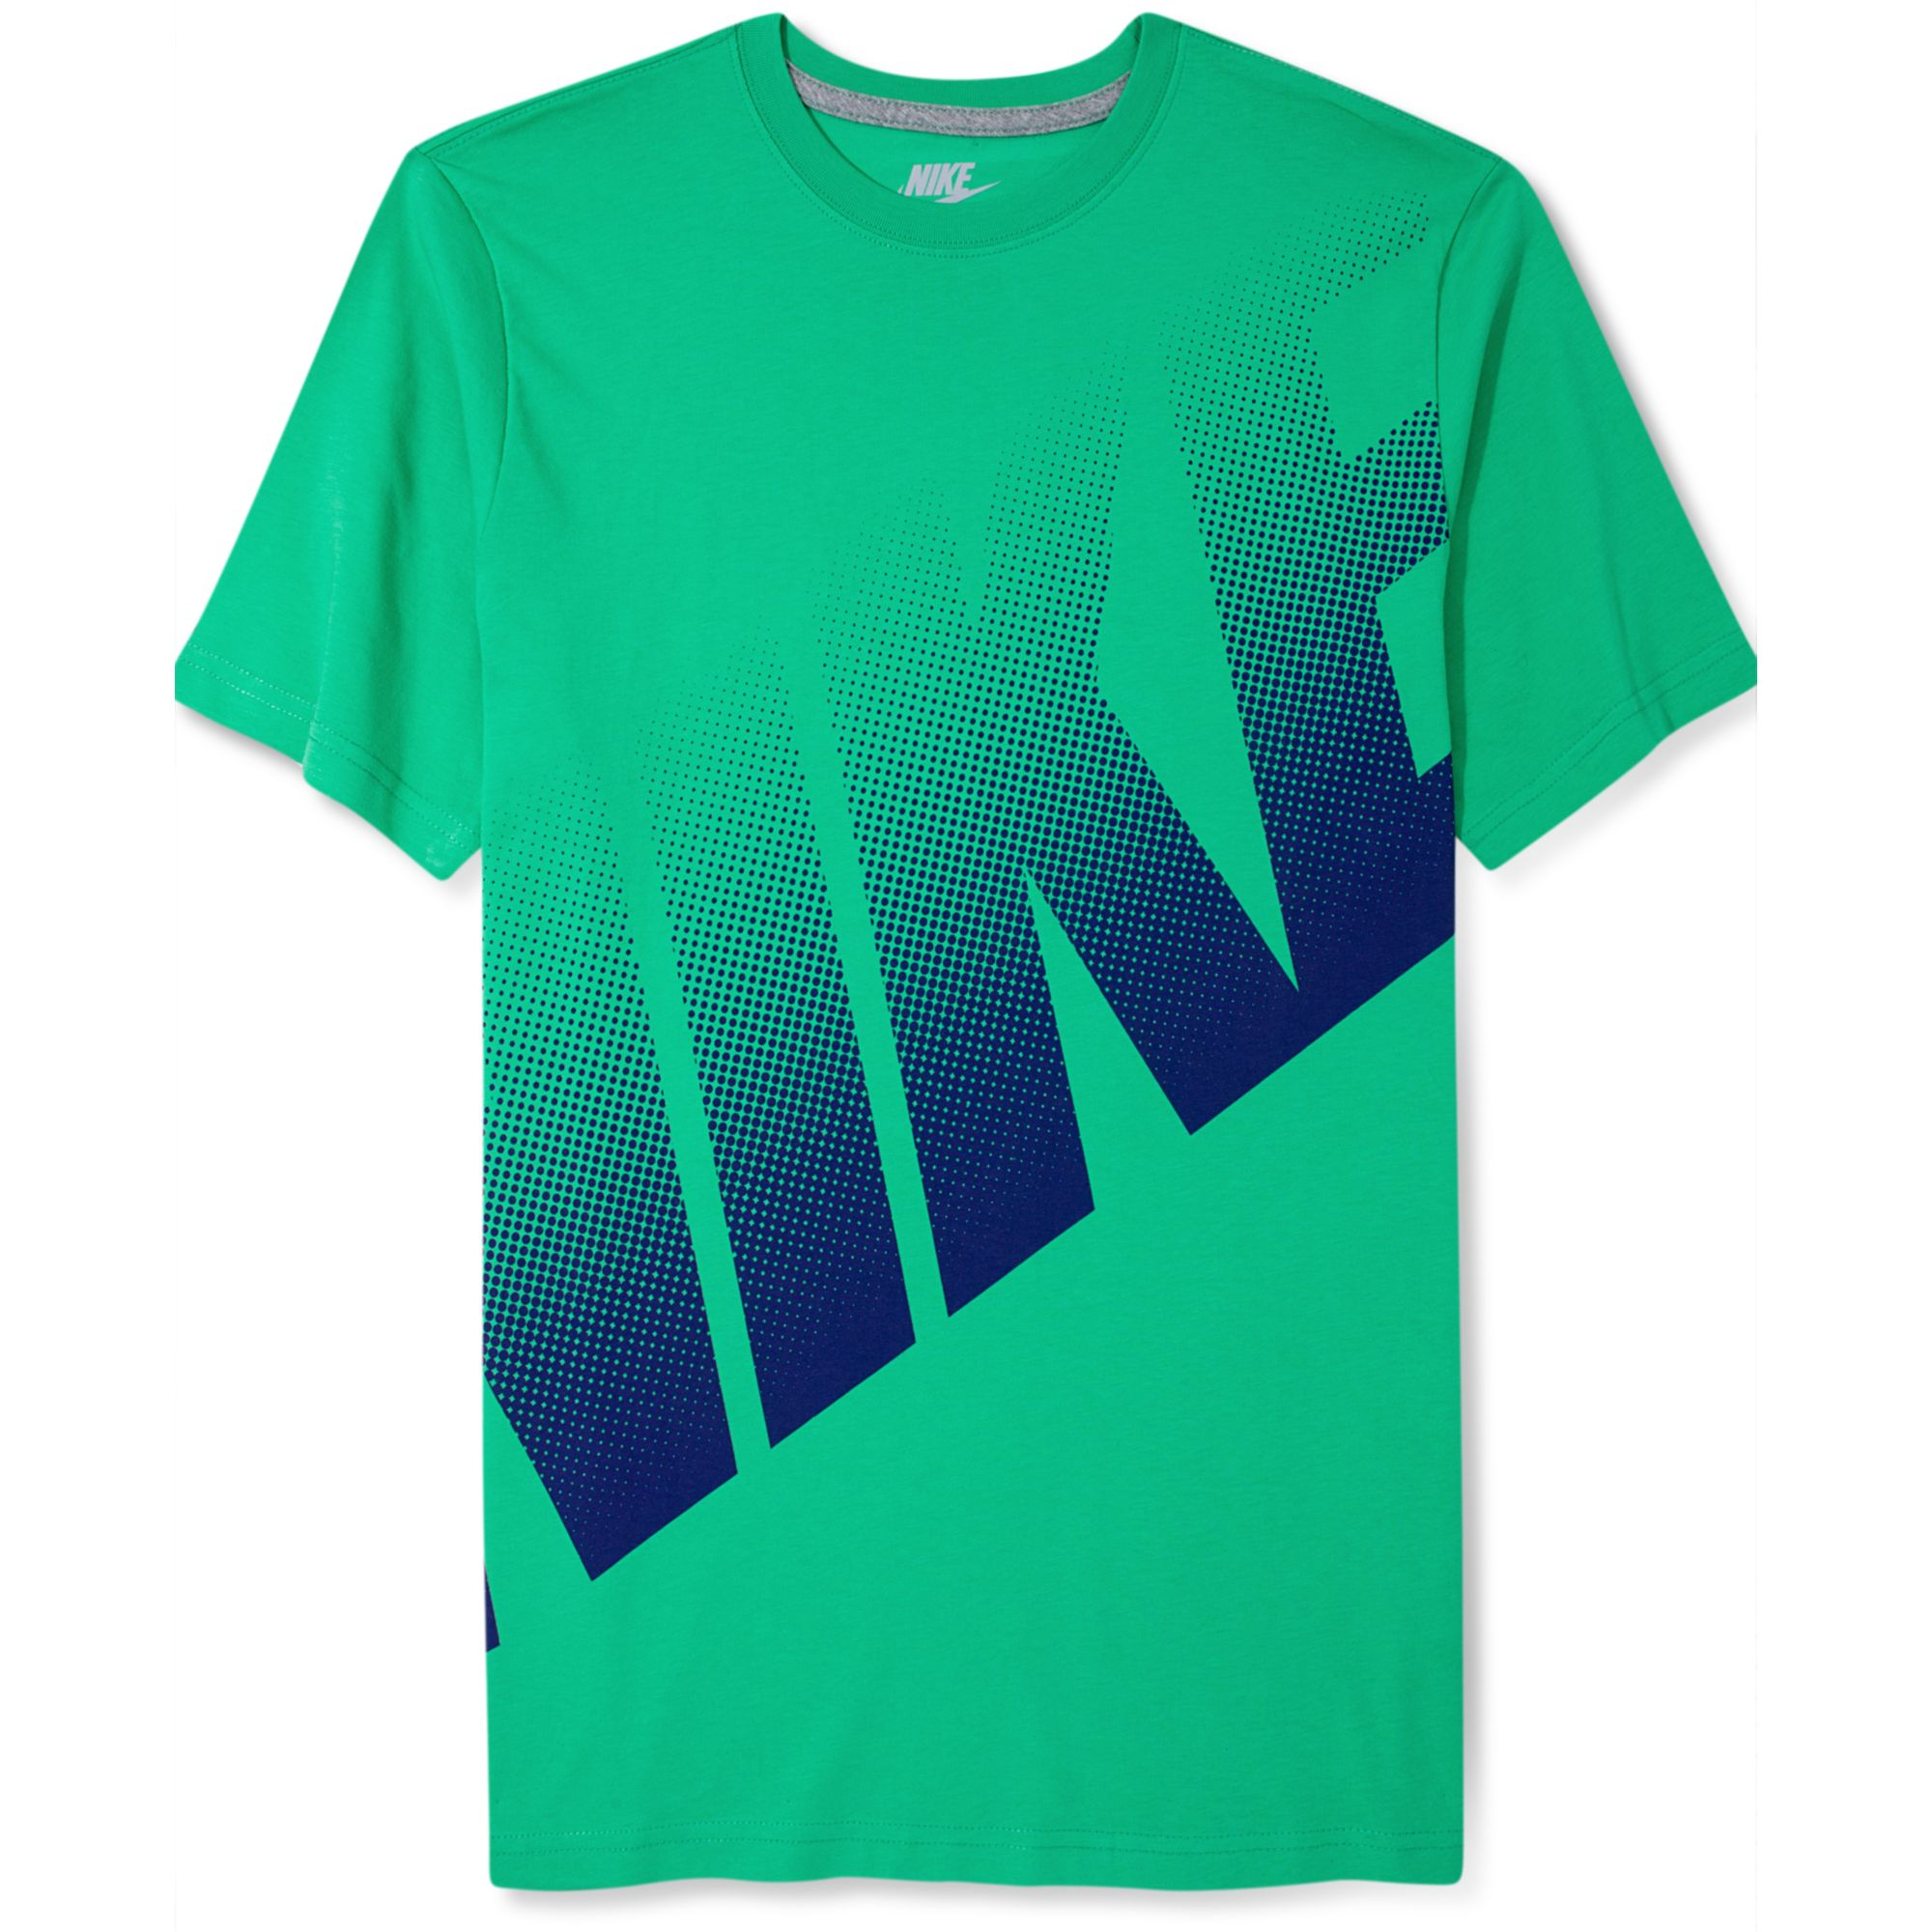 Lyst - Nike Big Dot Logo Tshirt in Green for Men